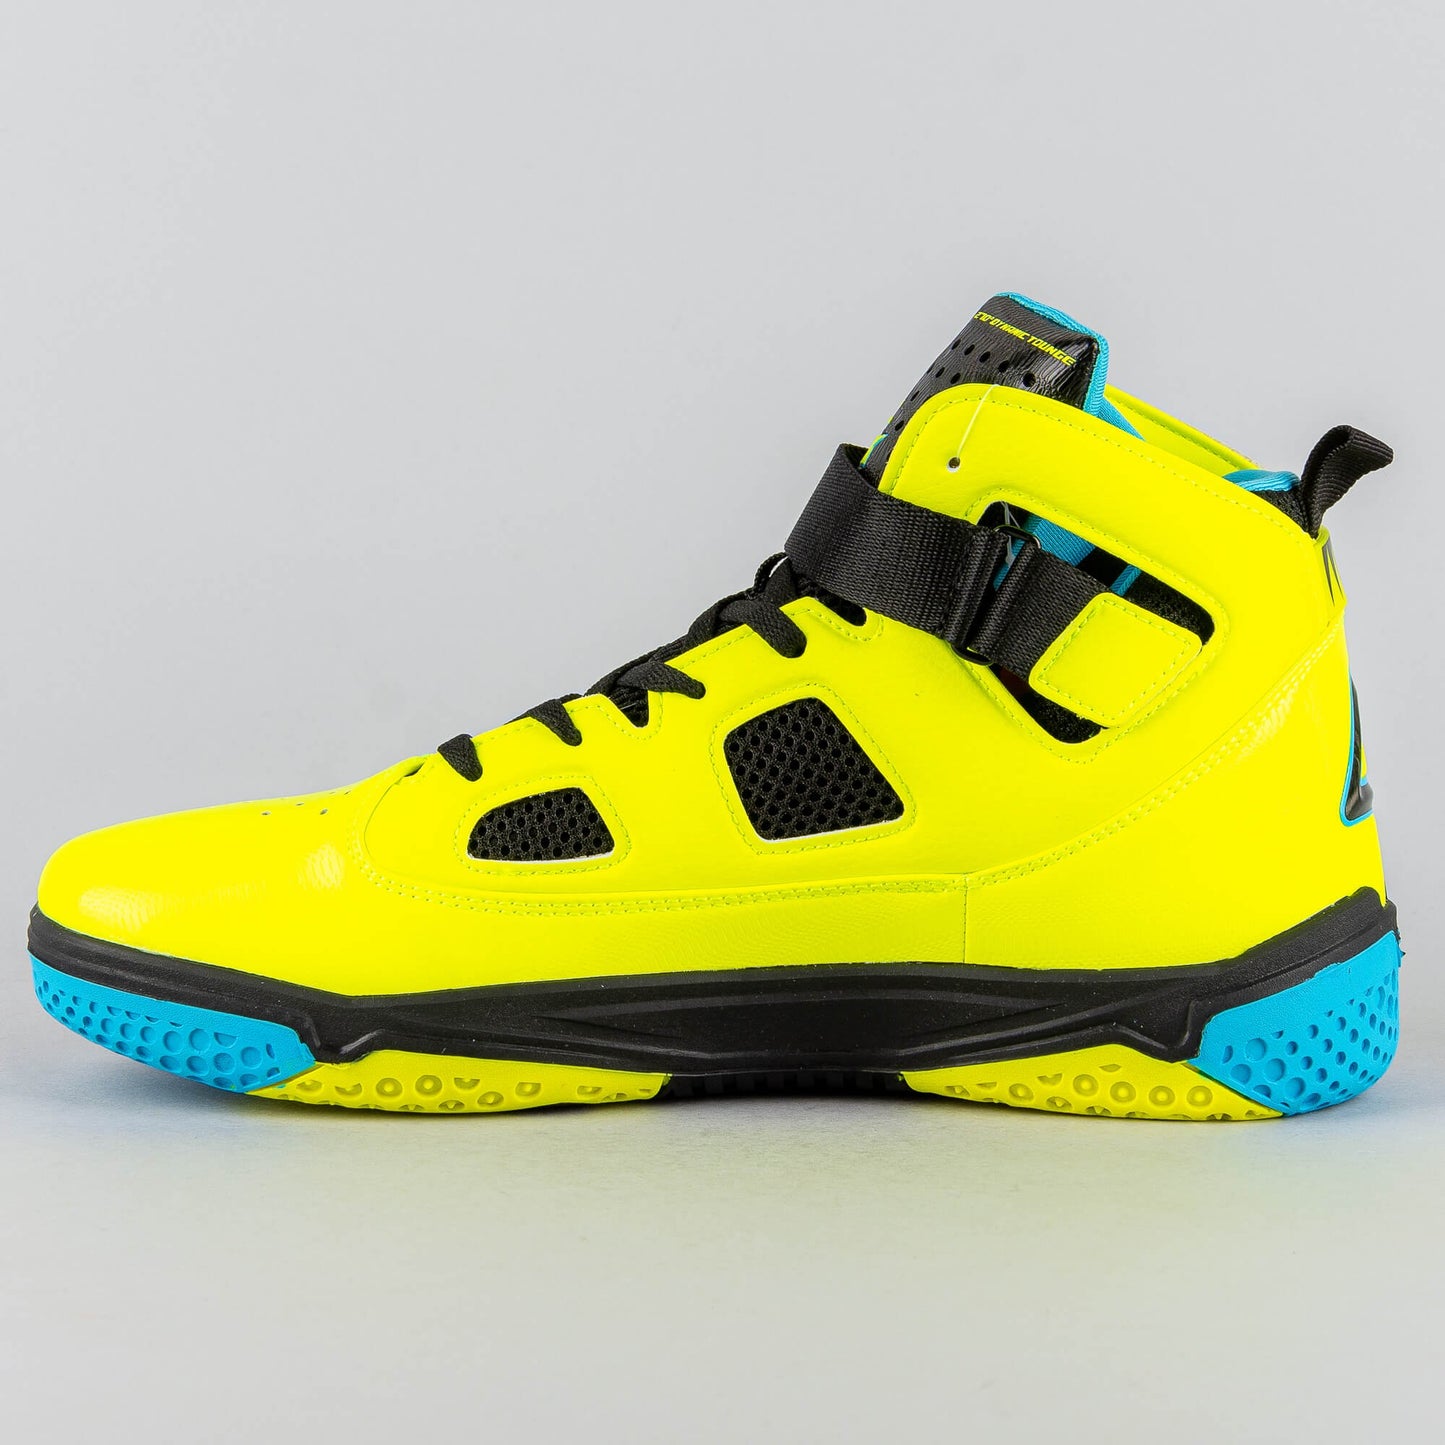 Peak Basketball Shoes Monster IV Fluorescent Yellow/Blue